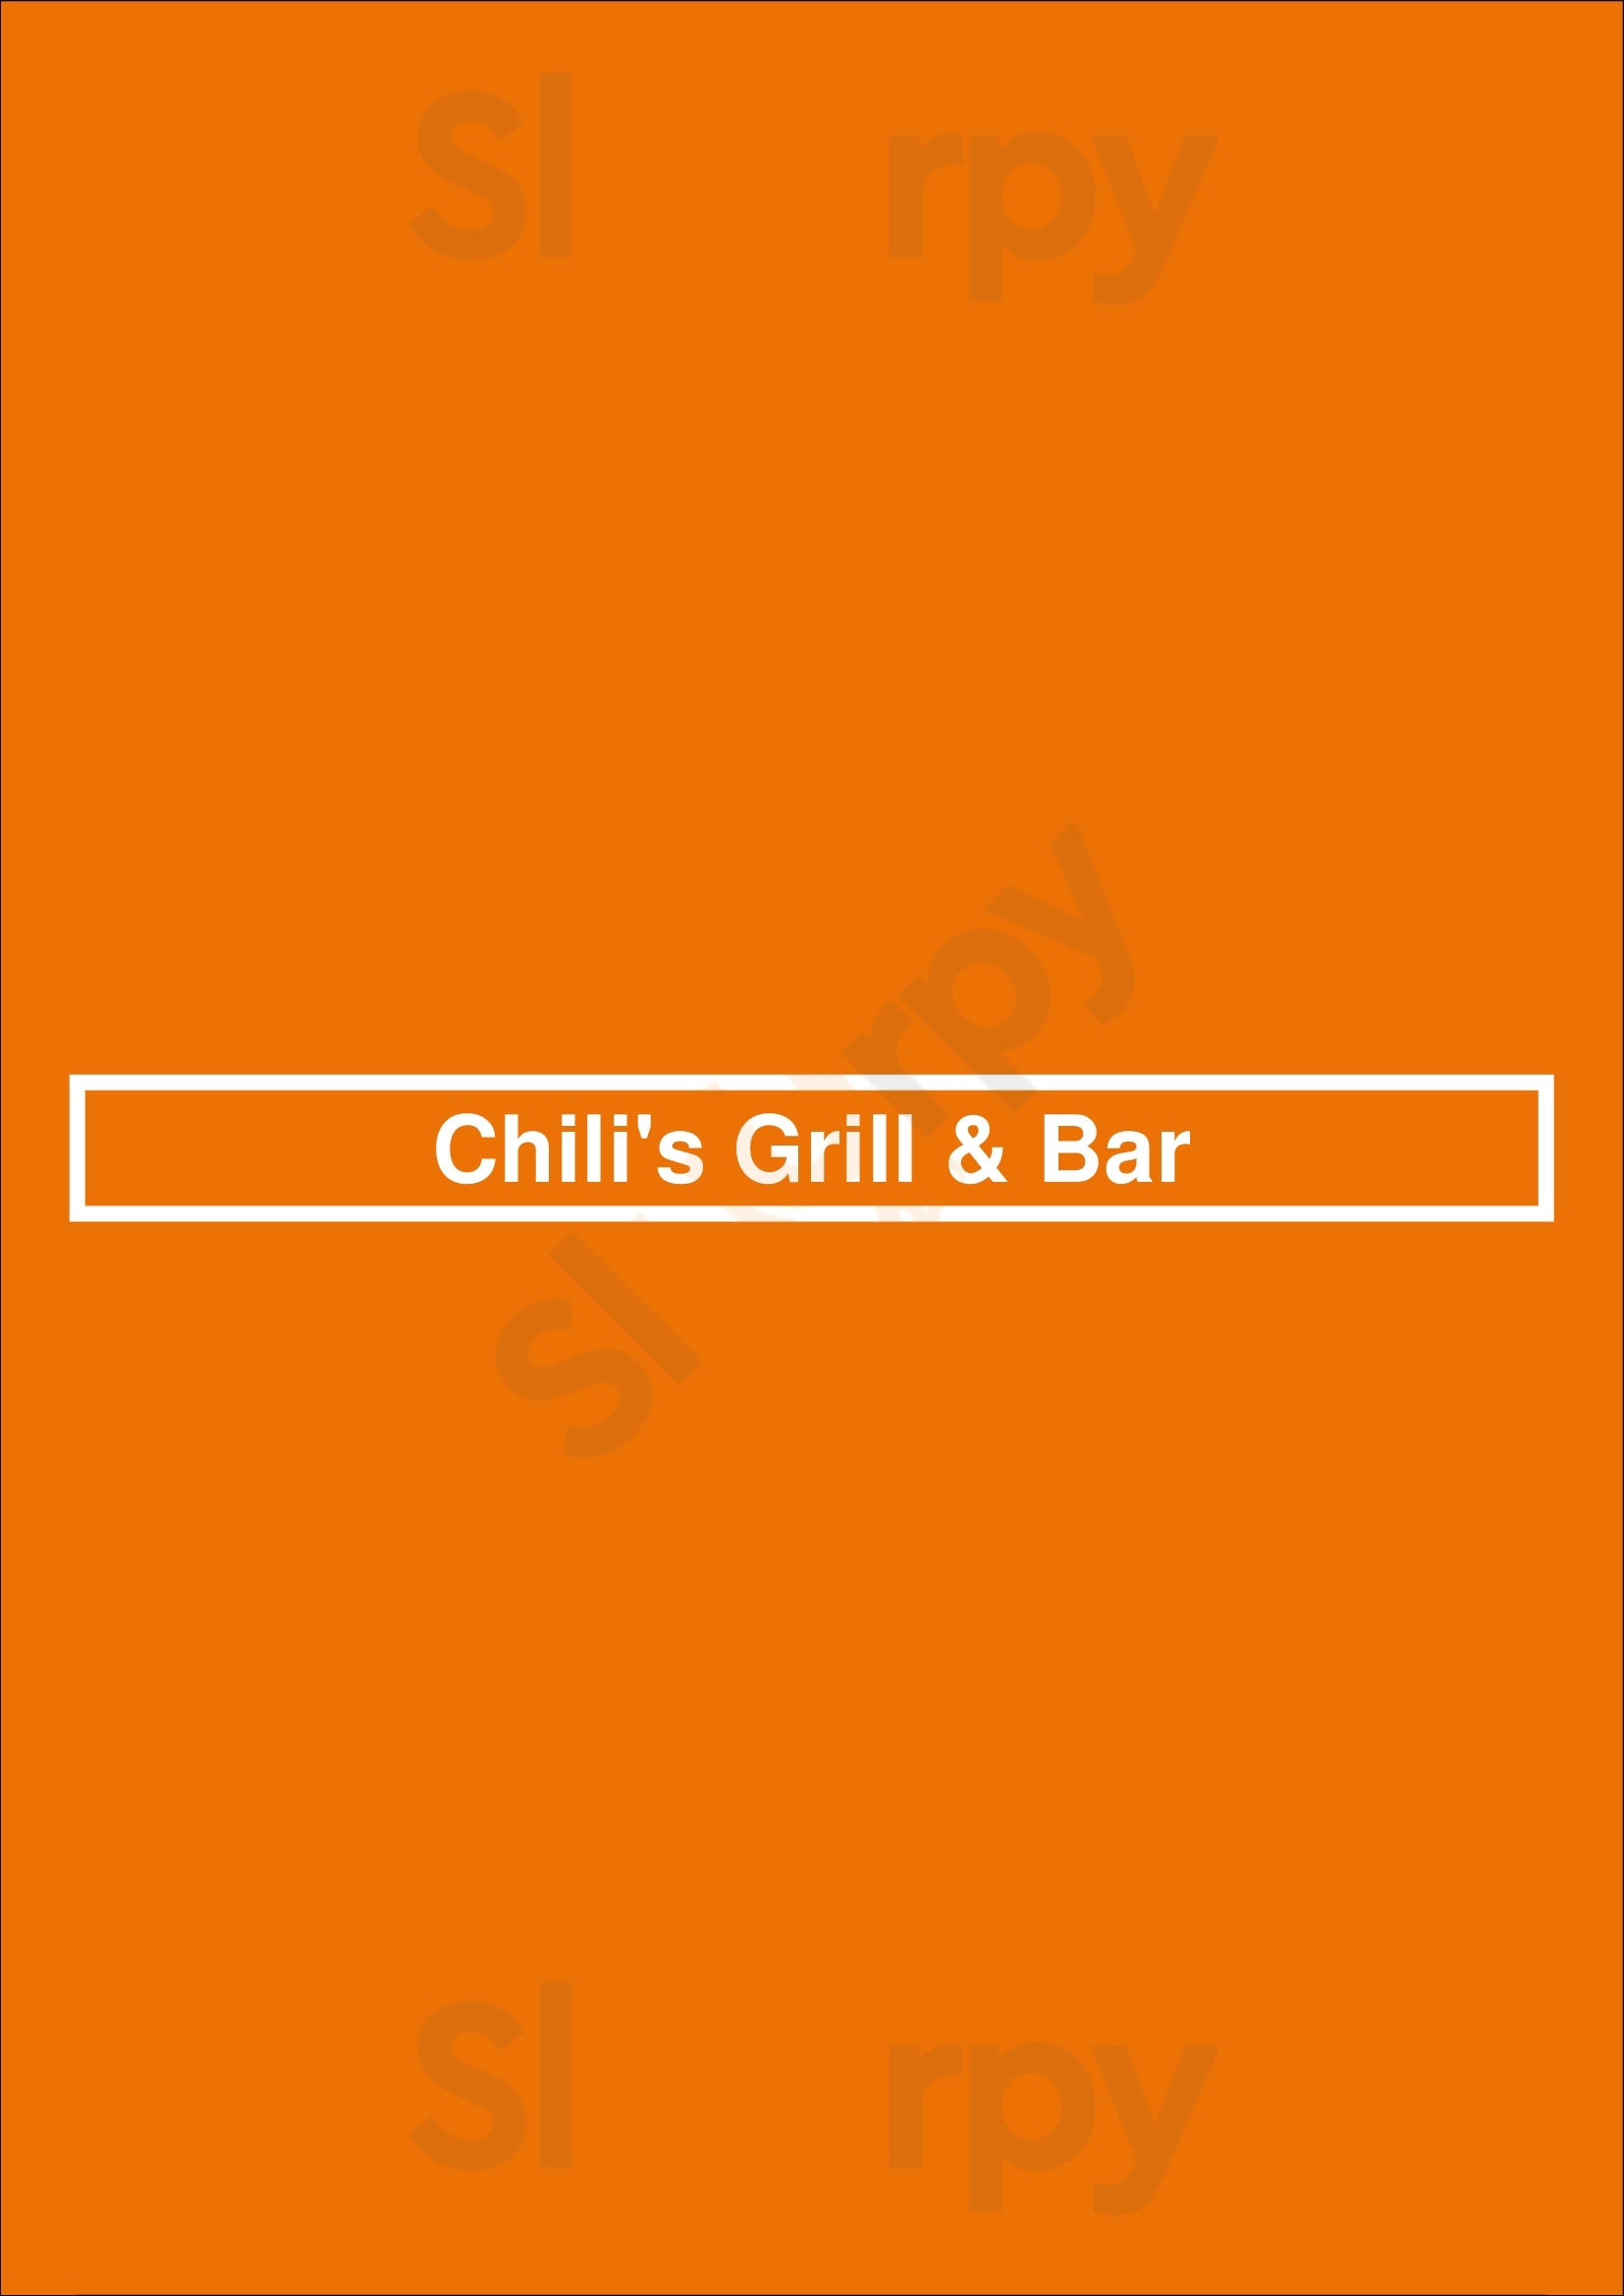 Chili's Grill & Bar Glastonbury Menu - 1